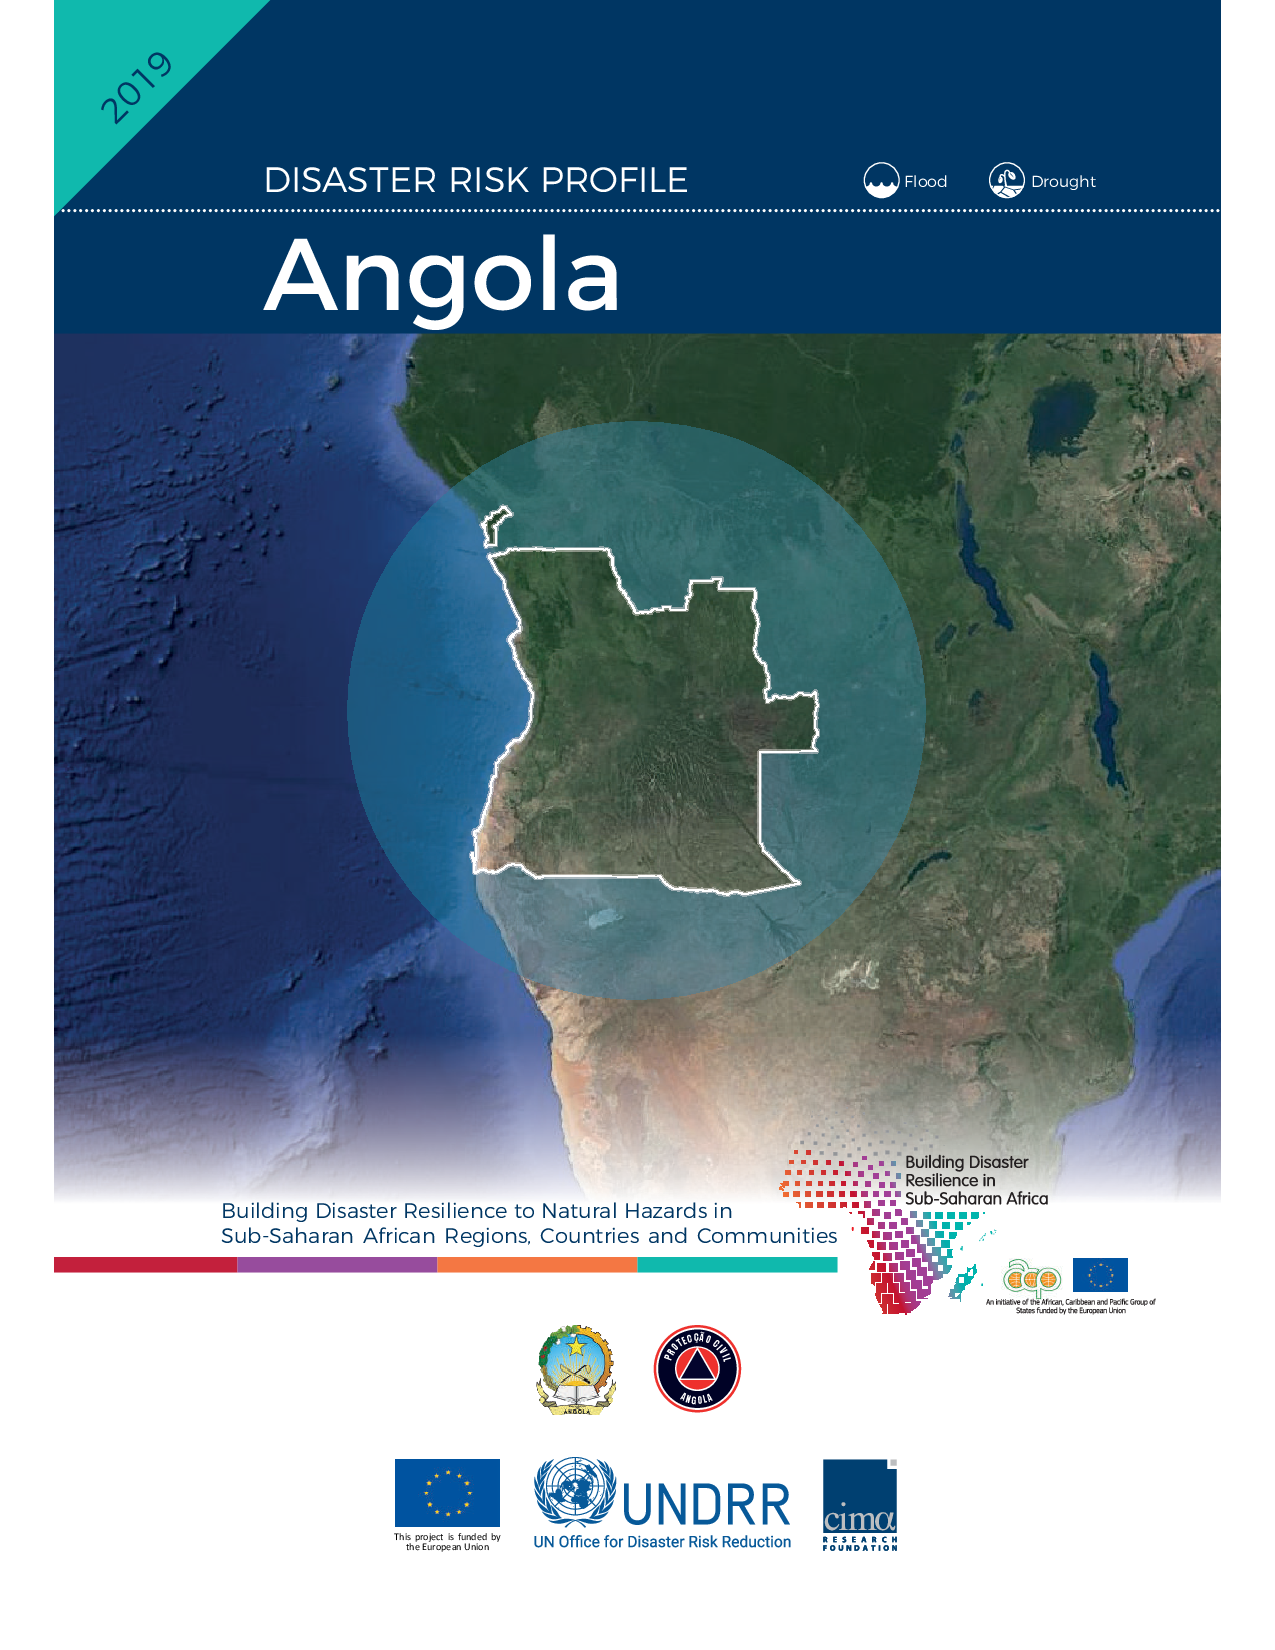 AGO: Angola Risk Profile - Floods & Droughts (2019)